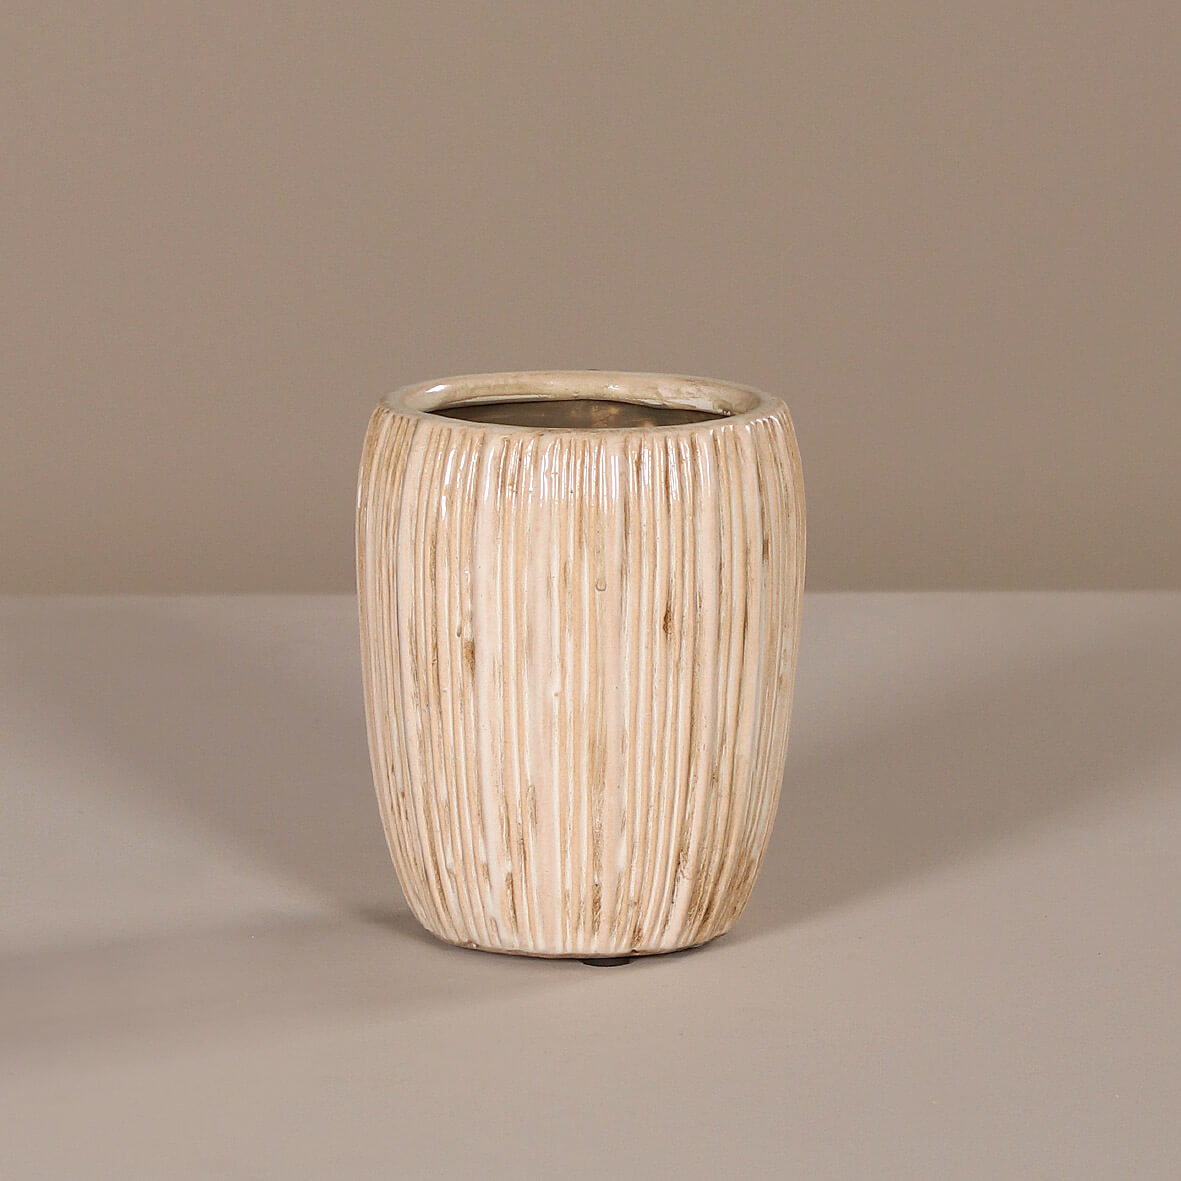 Deko Vase aus Keramik in creme weiß